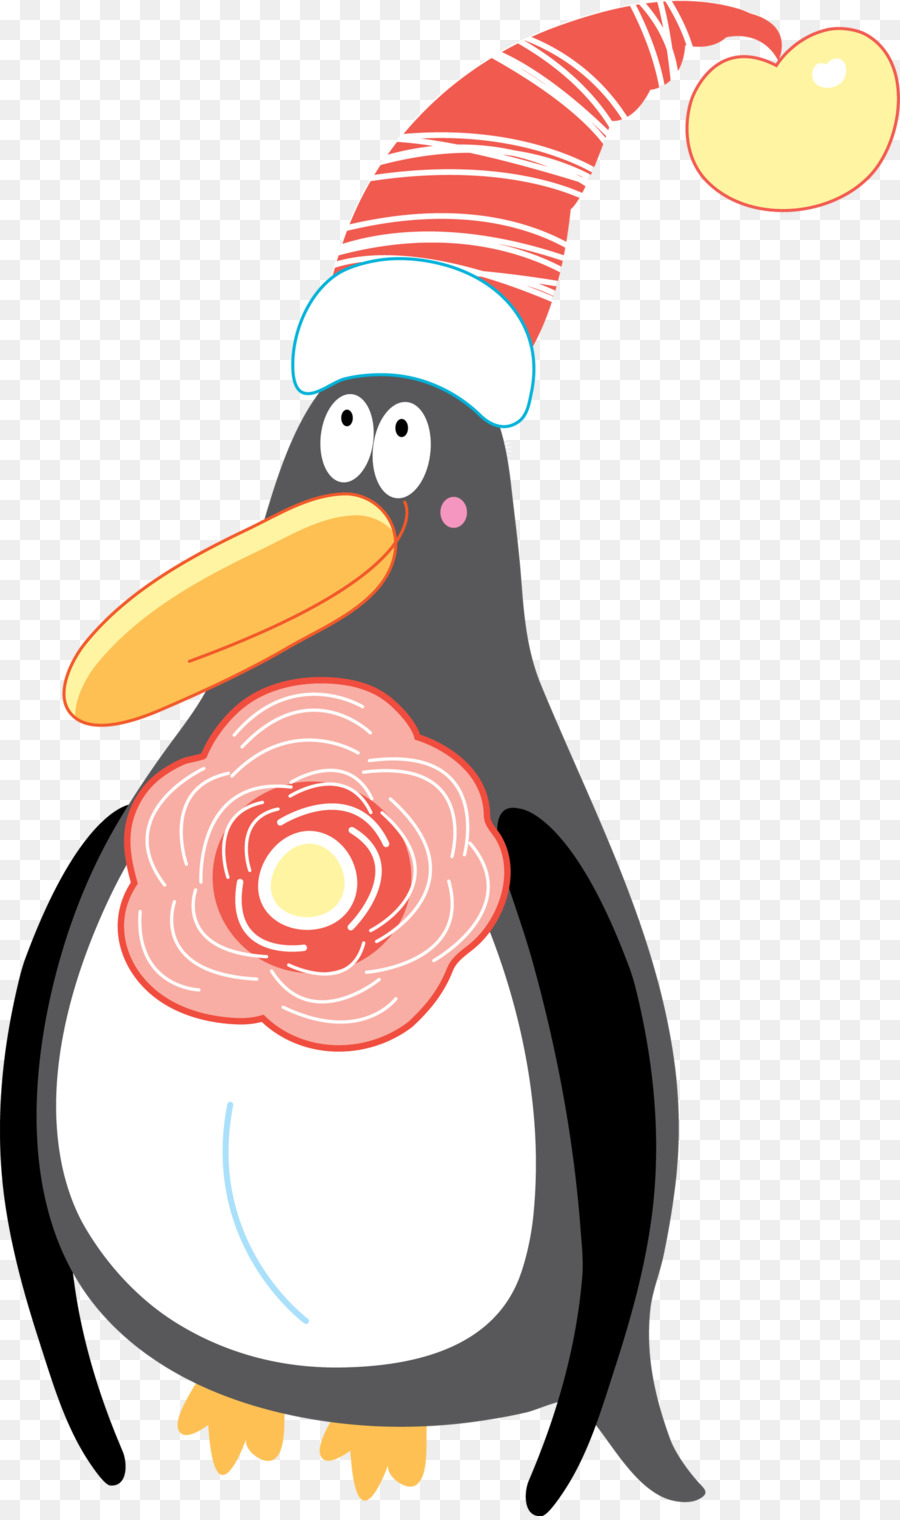 Pinguino Clip art - i pinguini di madagascar